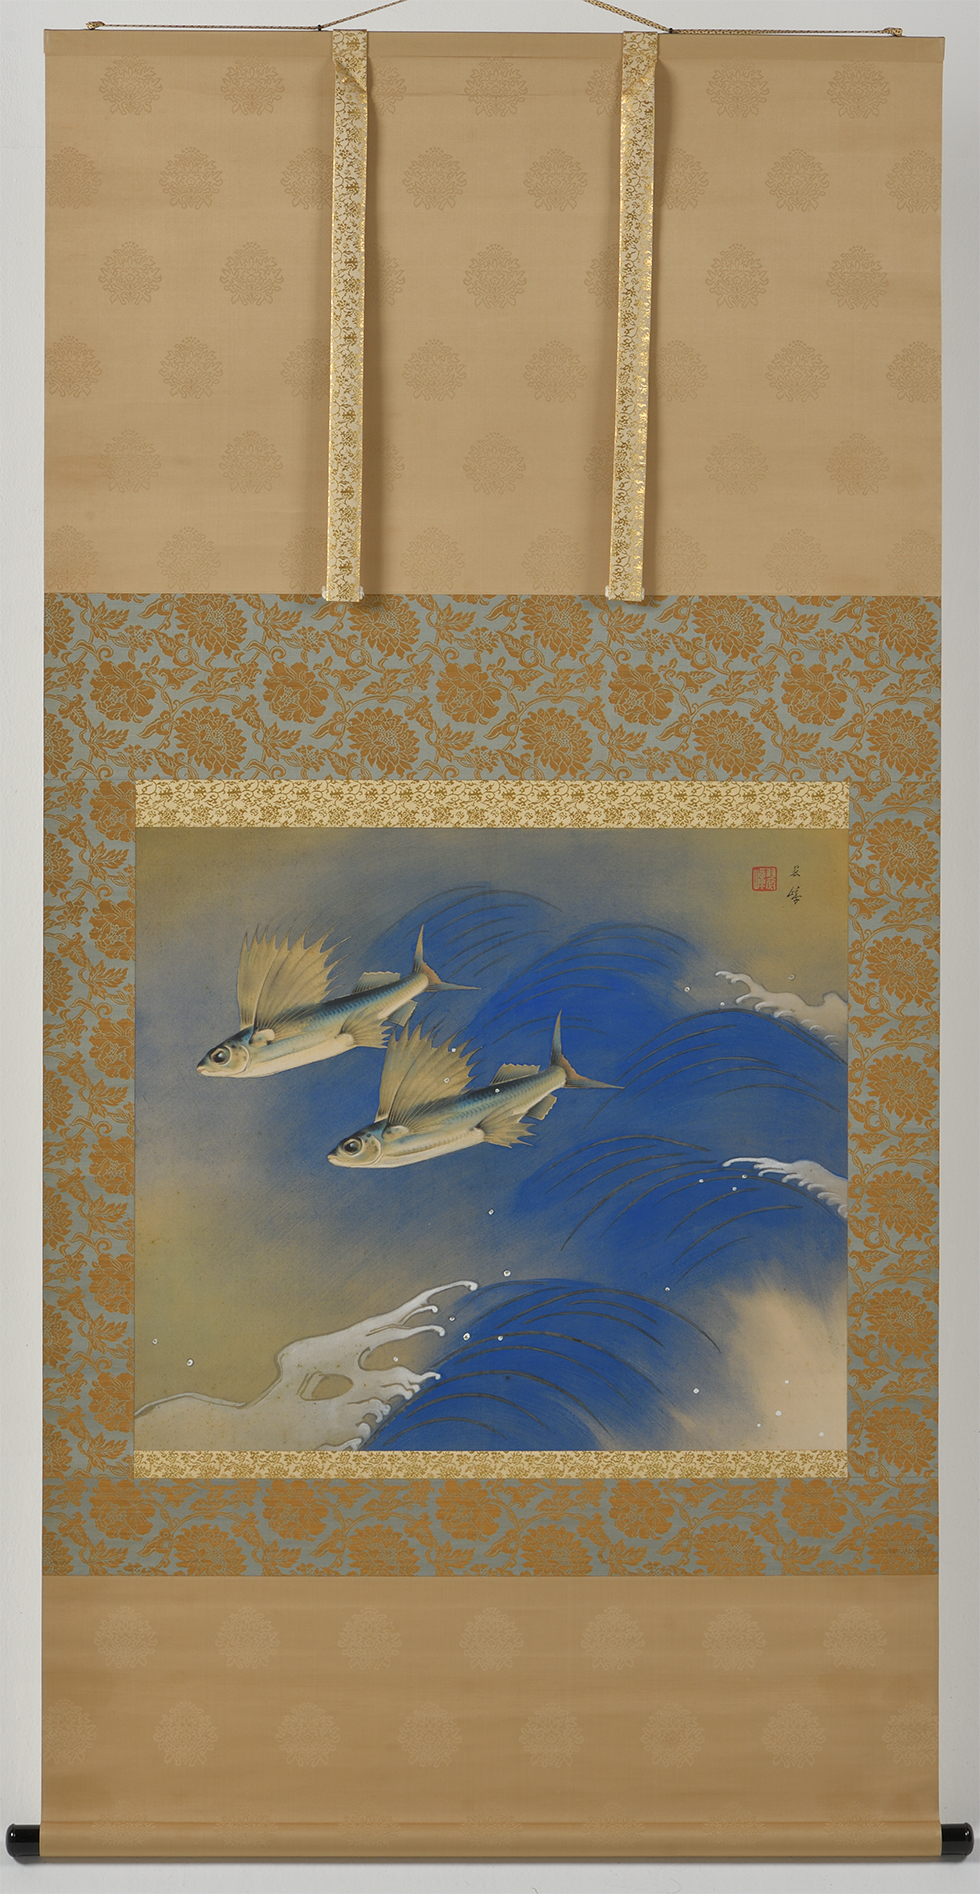 Hanging scroll “Flying Fish” painted by Nishiyama Suishō (1879 – 1958)